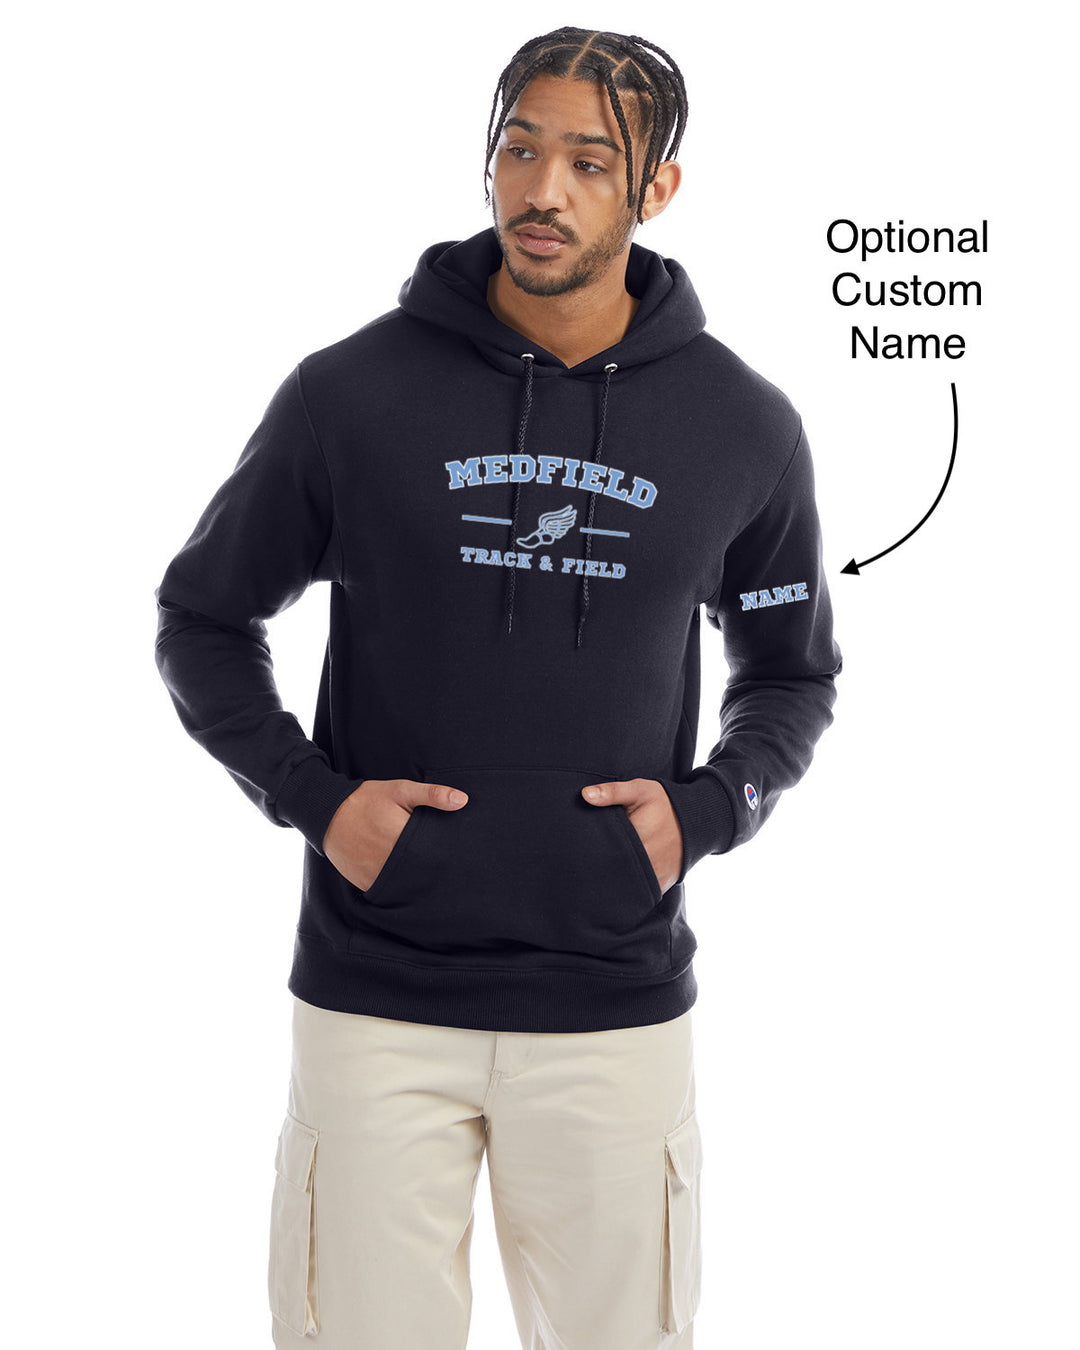 Medfield Track & Field Unisex Champion Pullover Hooded Sweatshirt (S700)